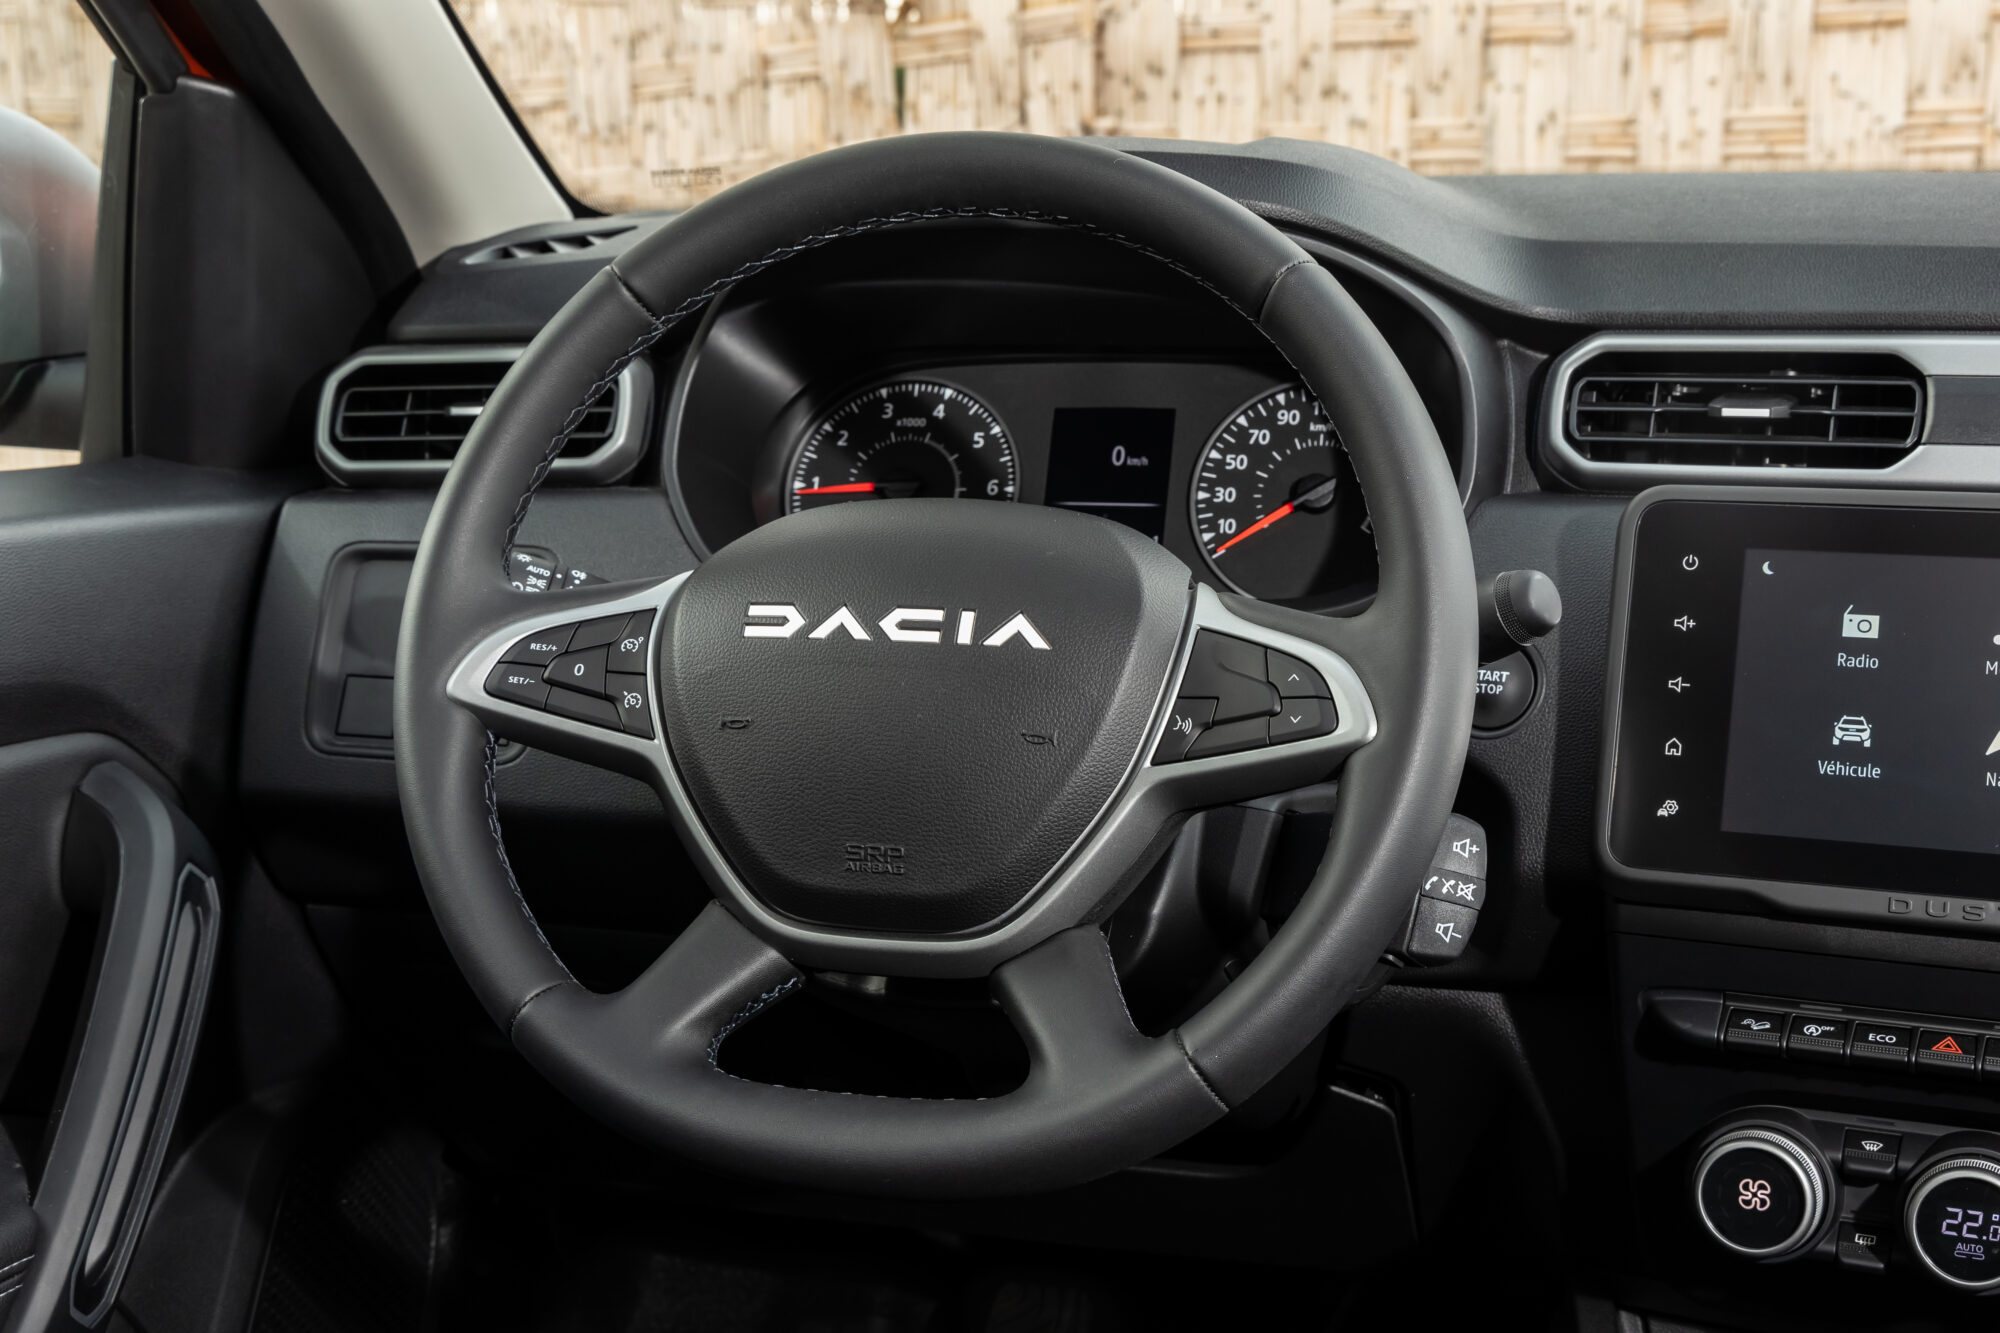 Dacia Duster off-road